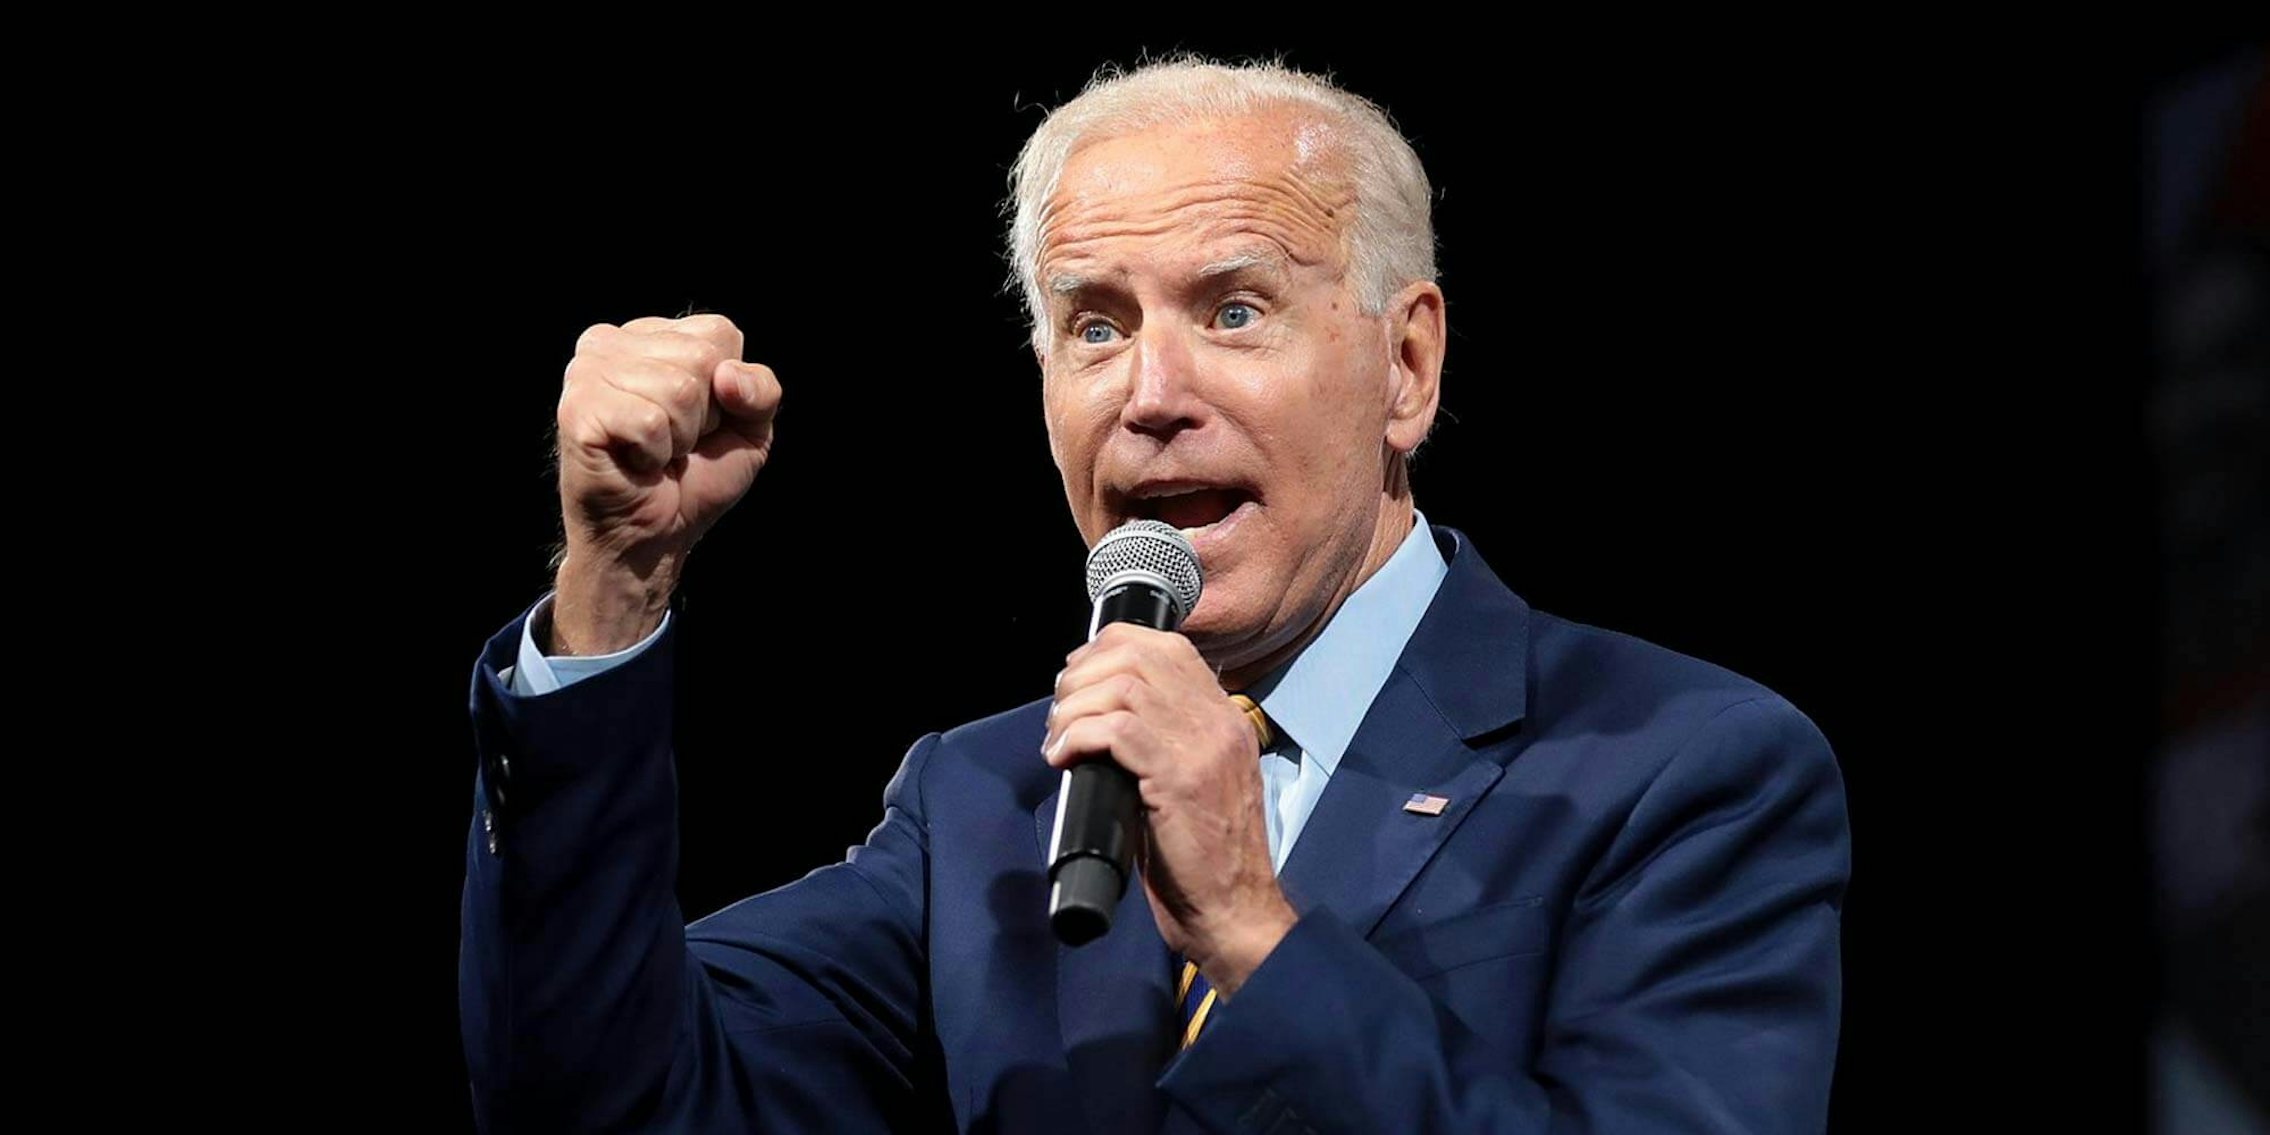 Joe Biden holding a microphone and speaking